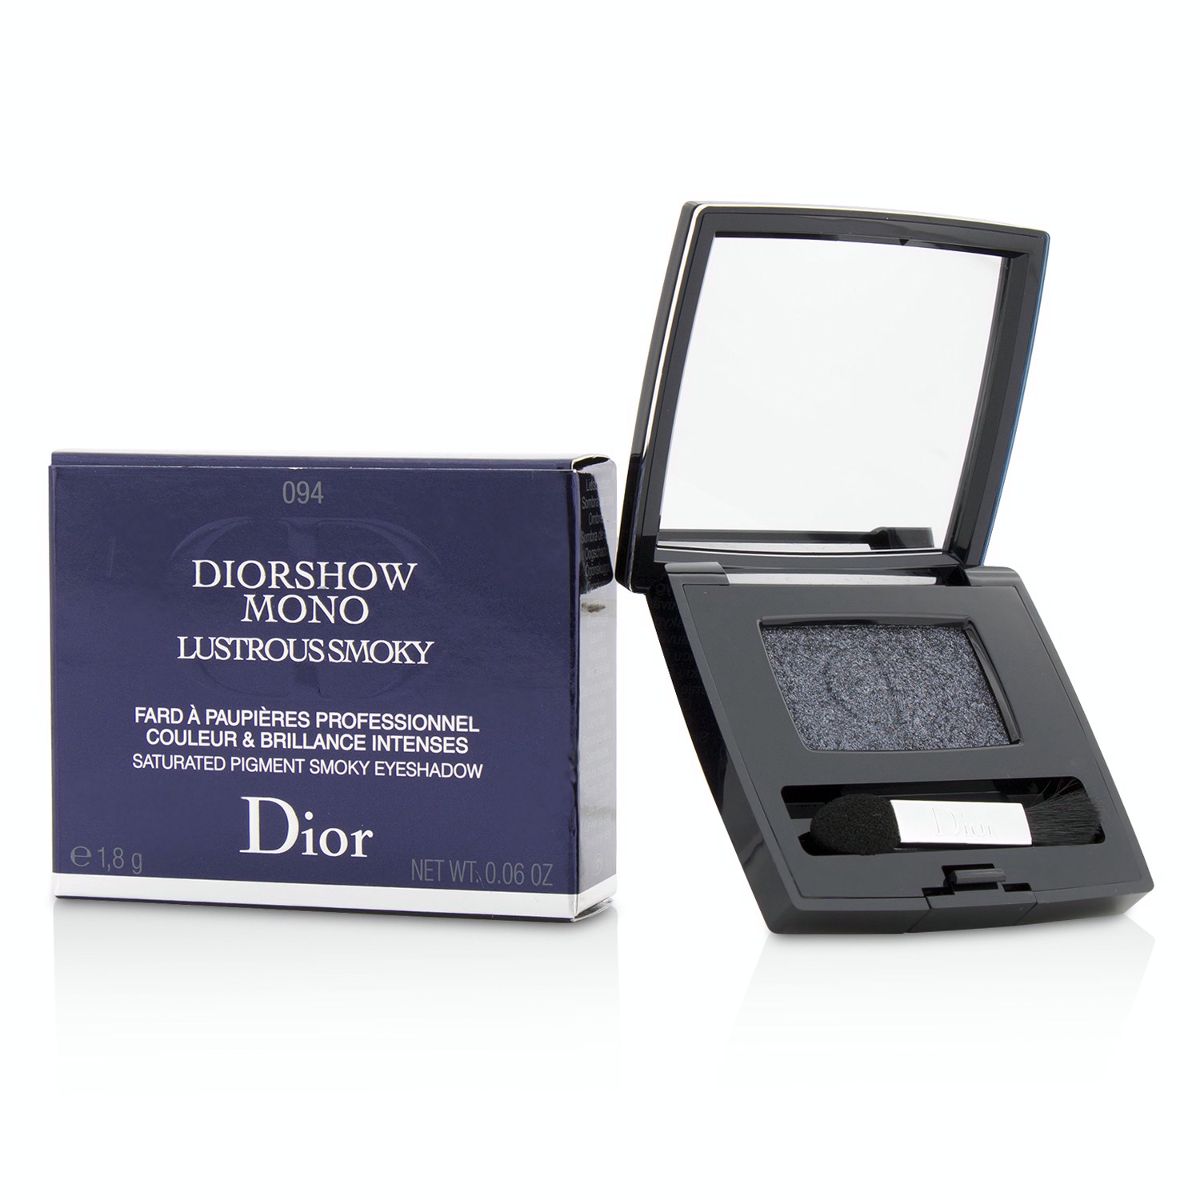 Diorshow Mono Lustrous Smoky Saturated Pigment Smoky Eyeshadow - # 094 Gravity Christian Dior Image